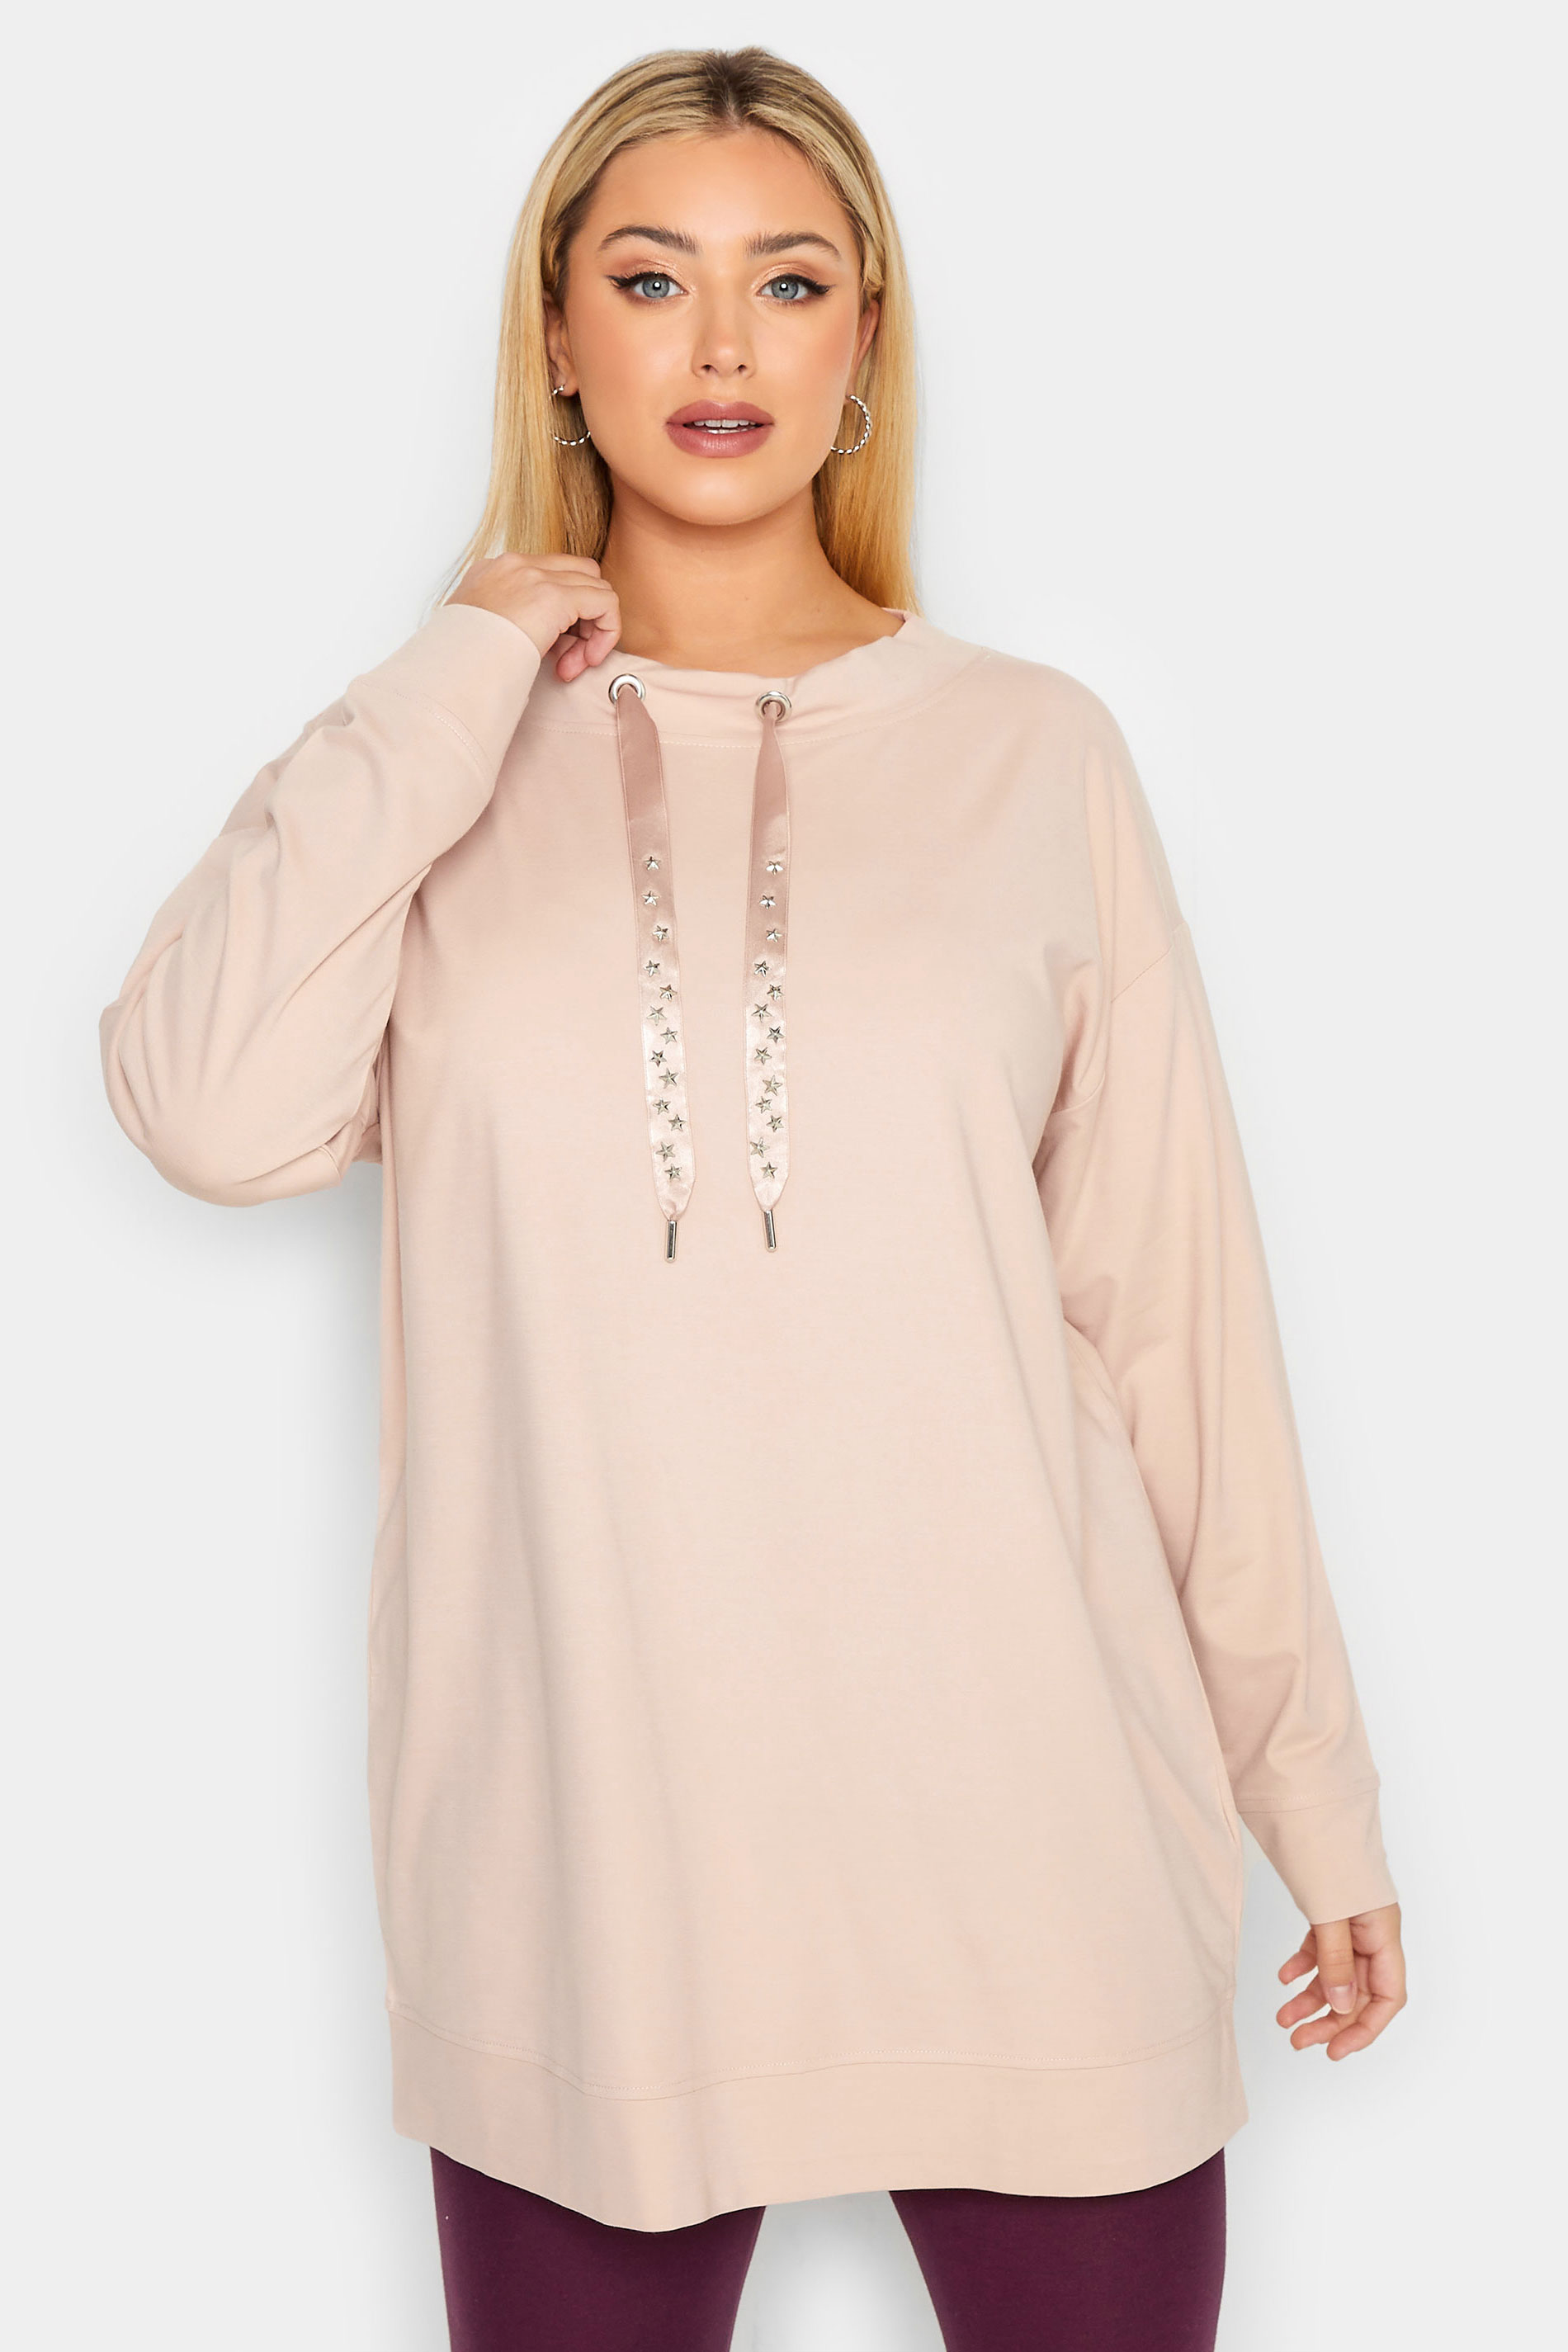 YOURS LUXURY Plus Size Pink Star Embellished Sweatshirt | Yours Clothing 2